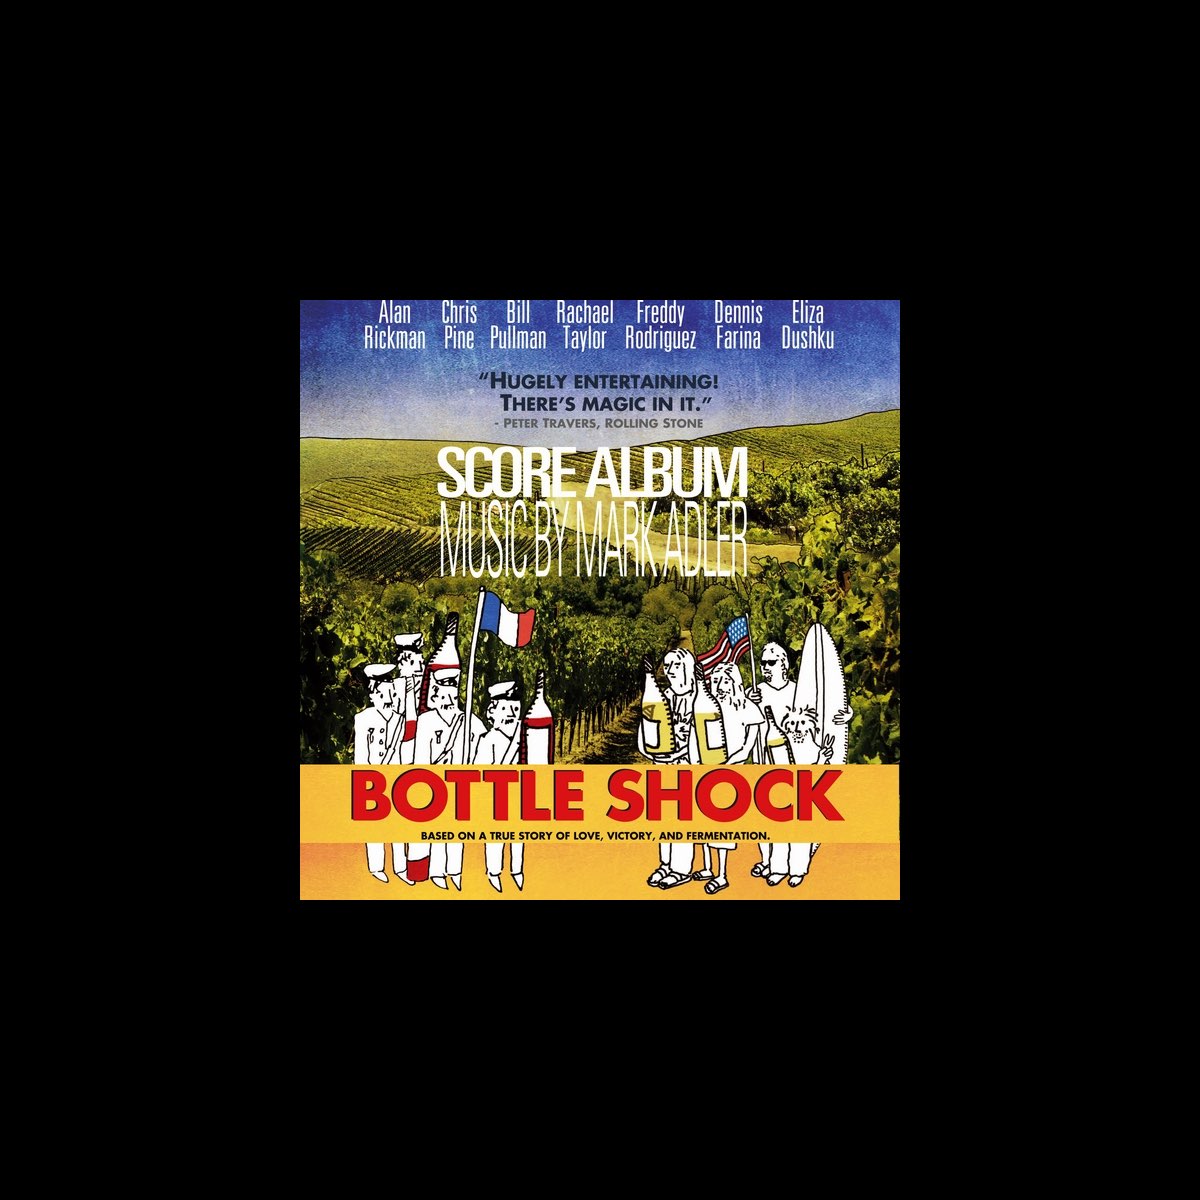 Bottle Shock (Original Soundtrack) - Album by Mark Adler - Apple Music